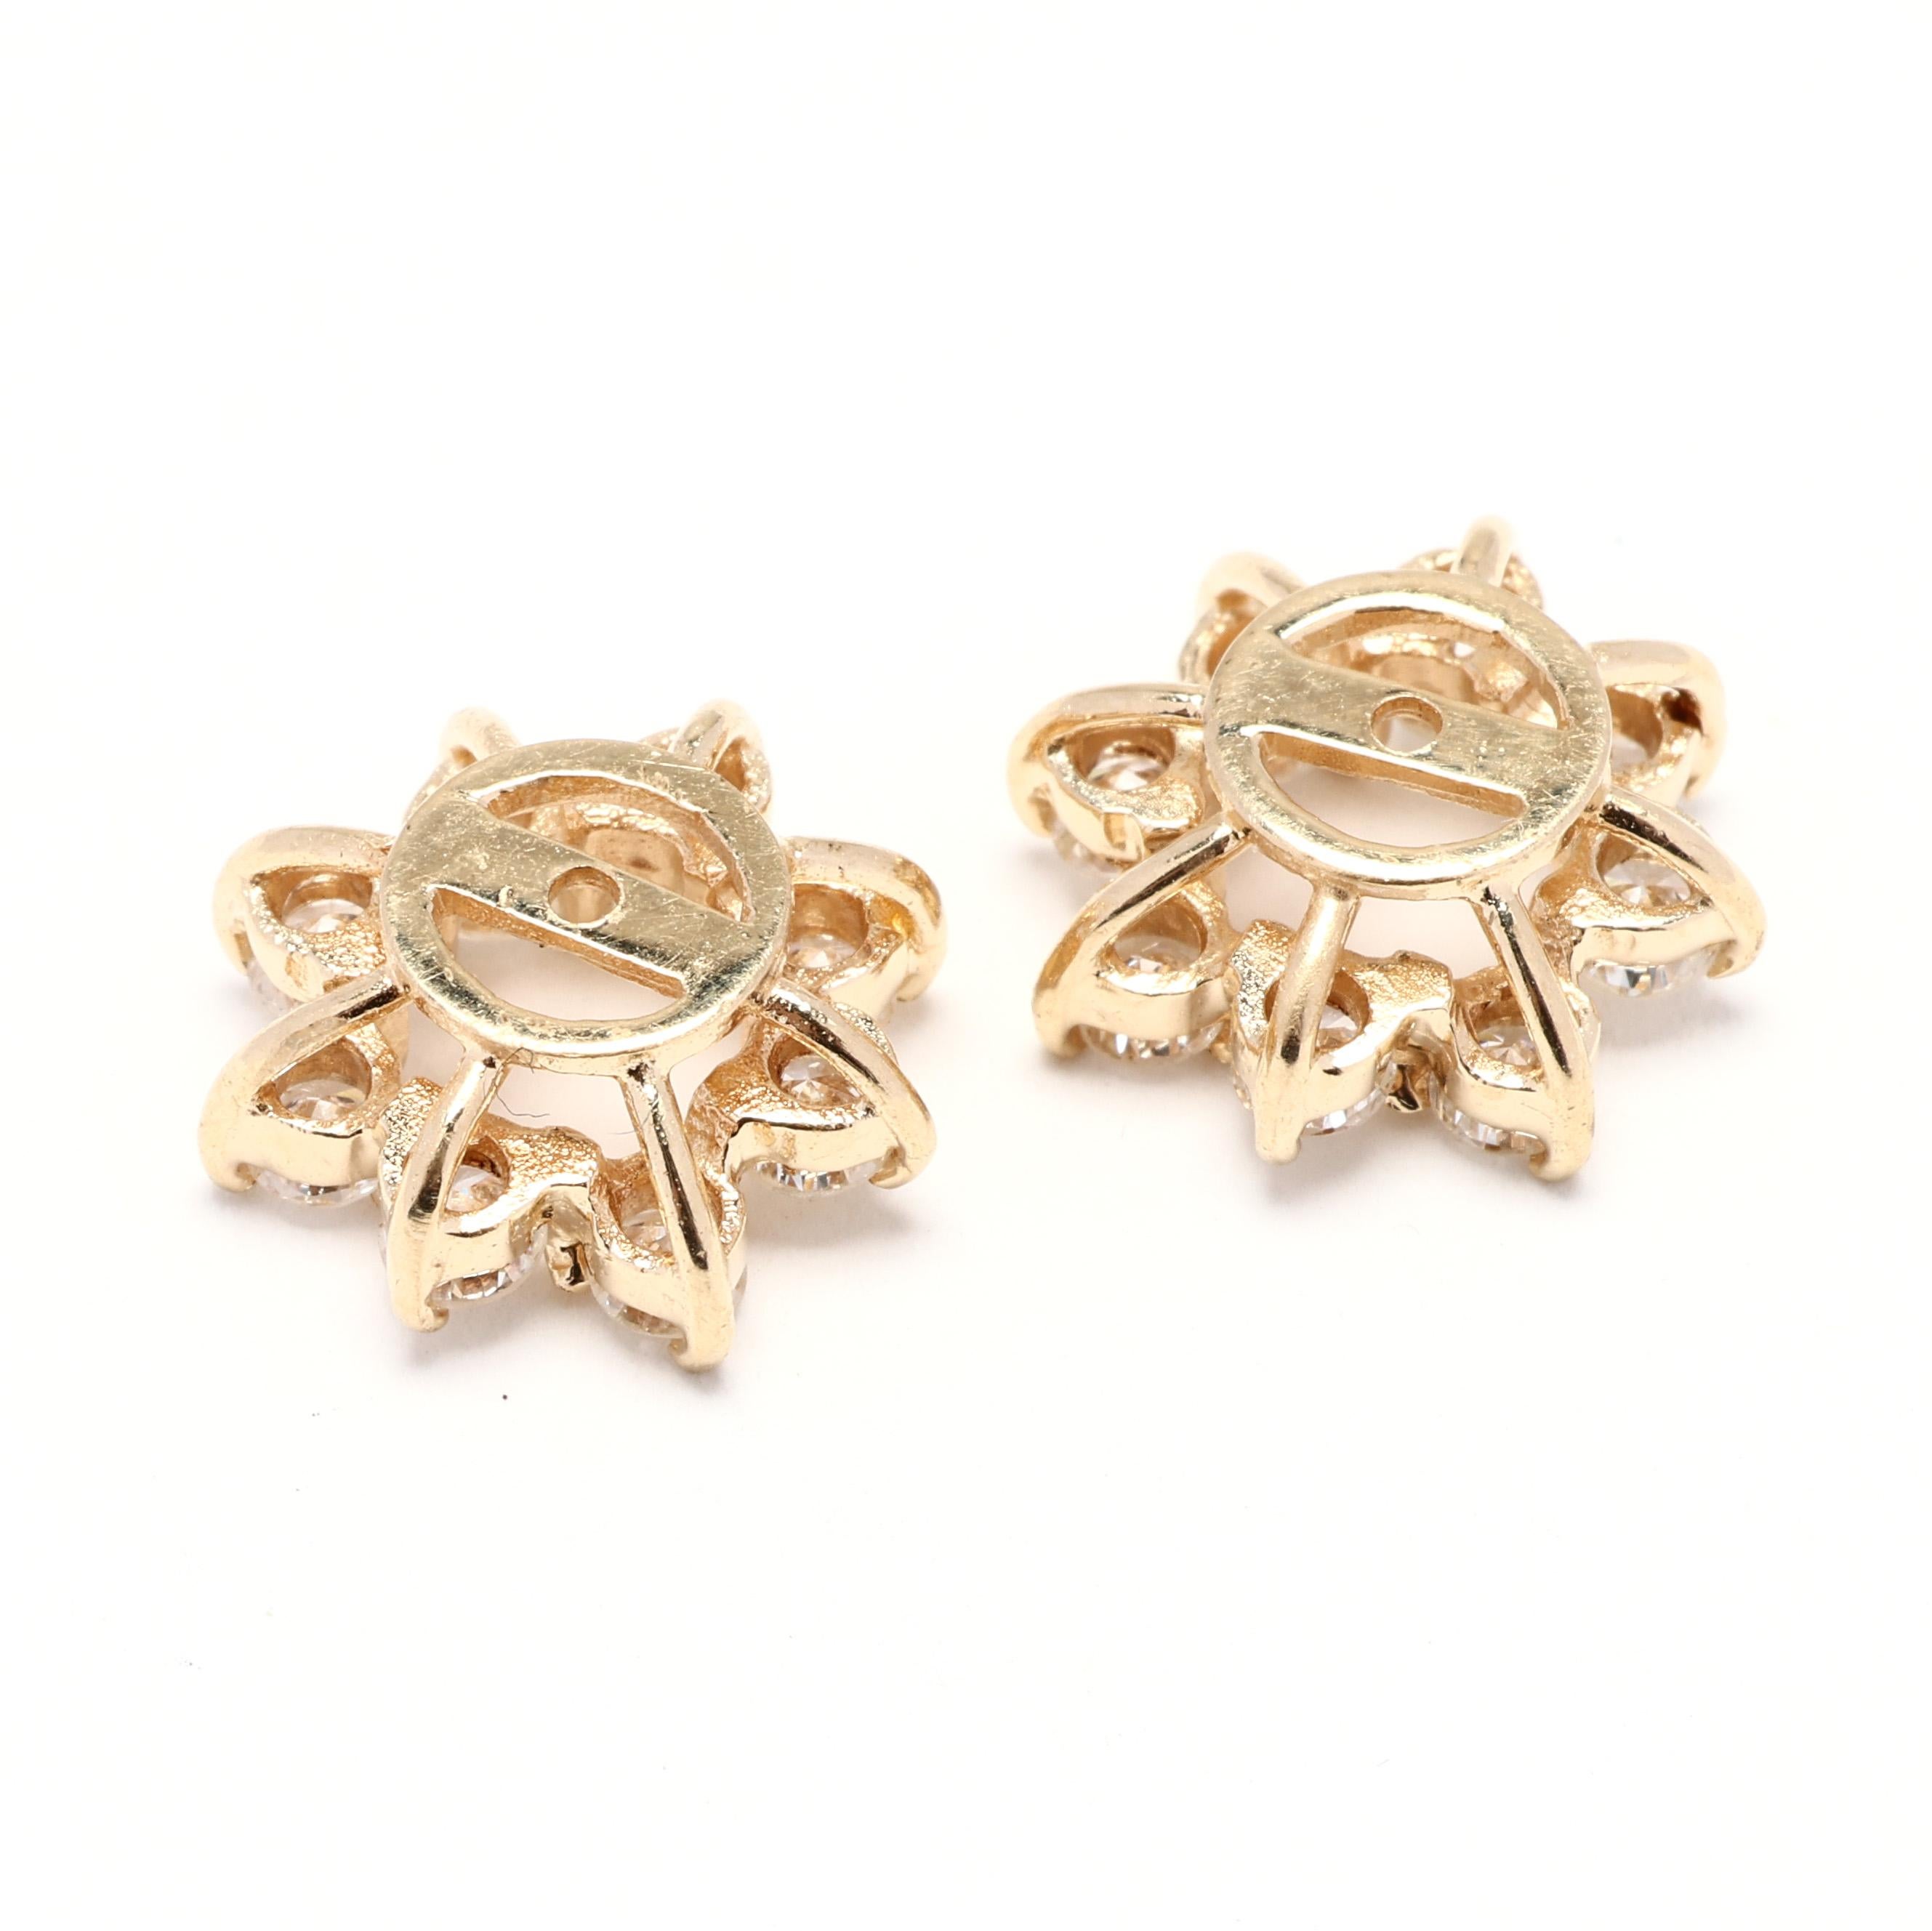 Brilliant Cut 1ctw Diamond and Gold Flower Earring Jackets, 14k Yellow Gold, Multi Diamond